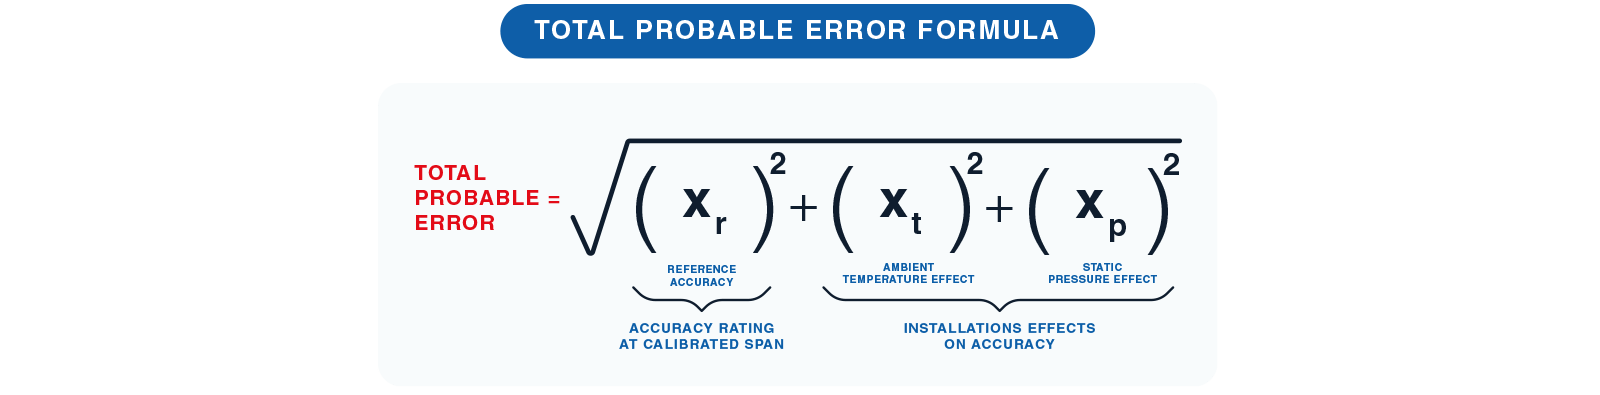 formula for calculating probable total error